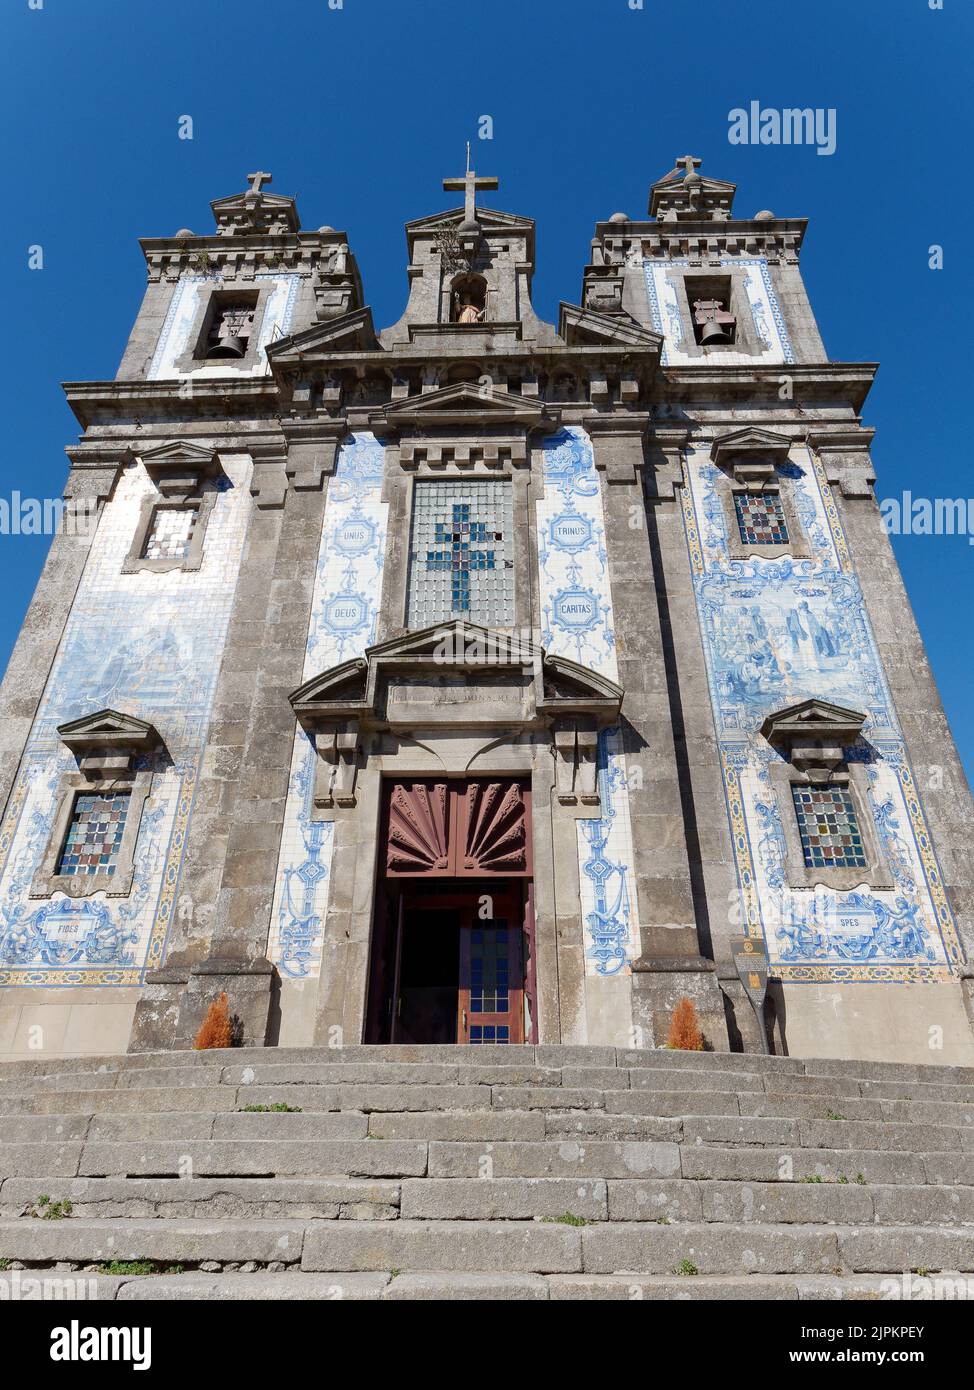 Igreja de Santo Ildefonso aka Church of Saint Ildefonso. The blue and white tiles called Azulejos depict historical events. Porto, Portugal. Stock Photo